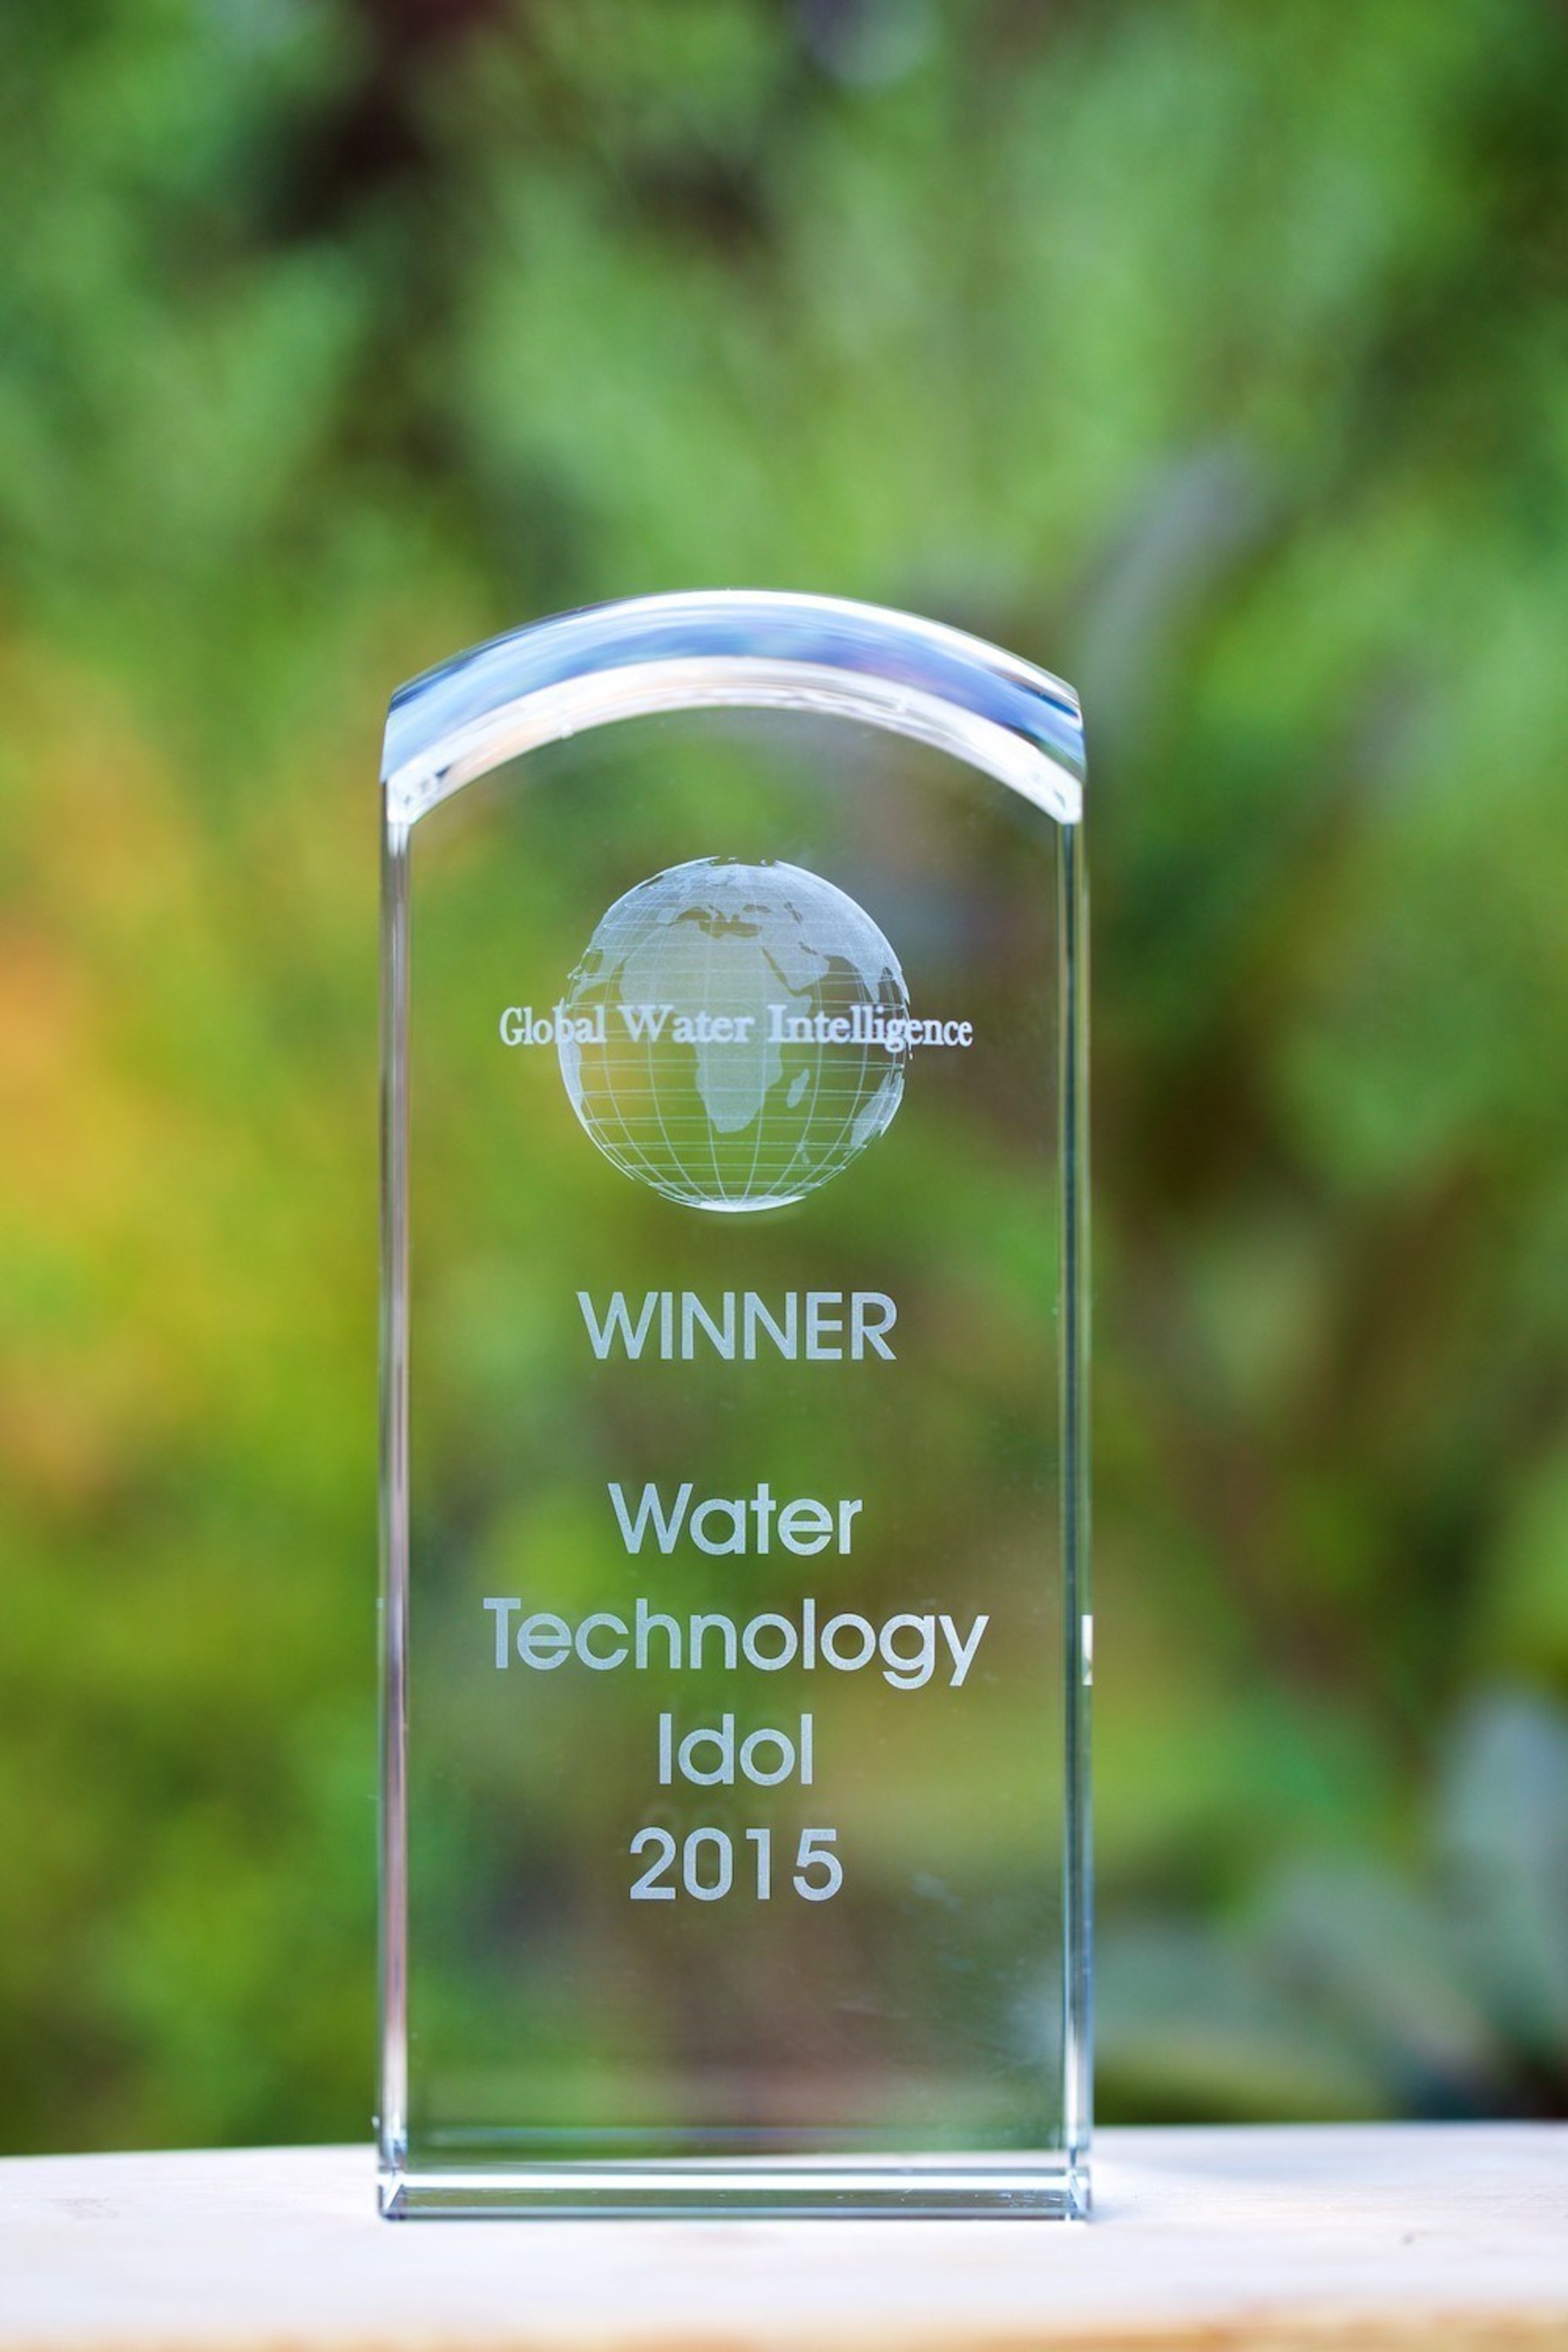 Spiral Water wins Technology Idol at prestigious Global Water Awards